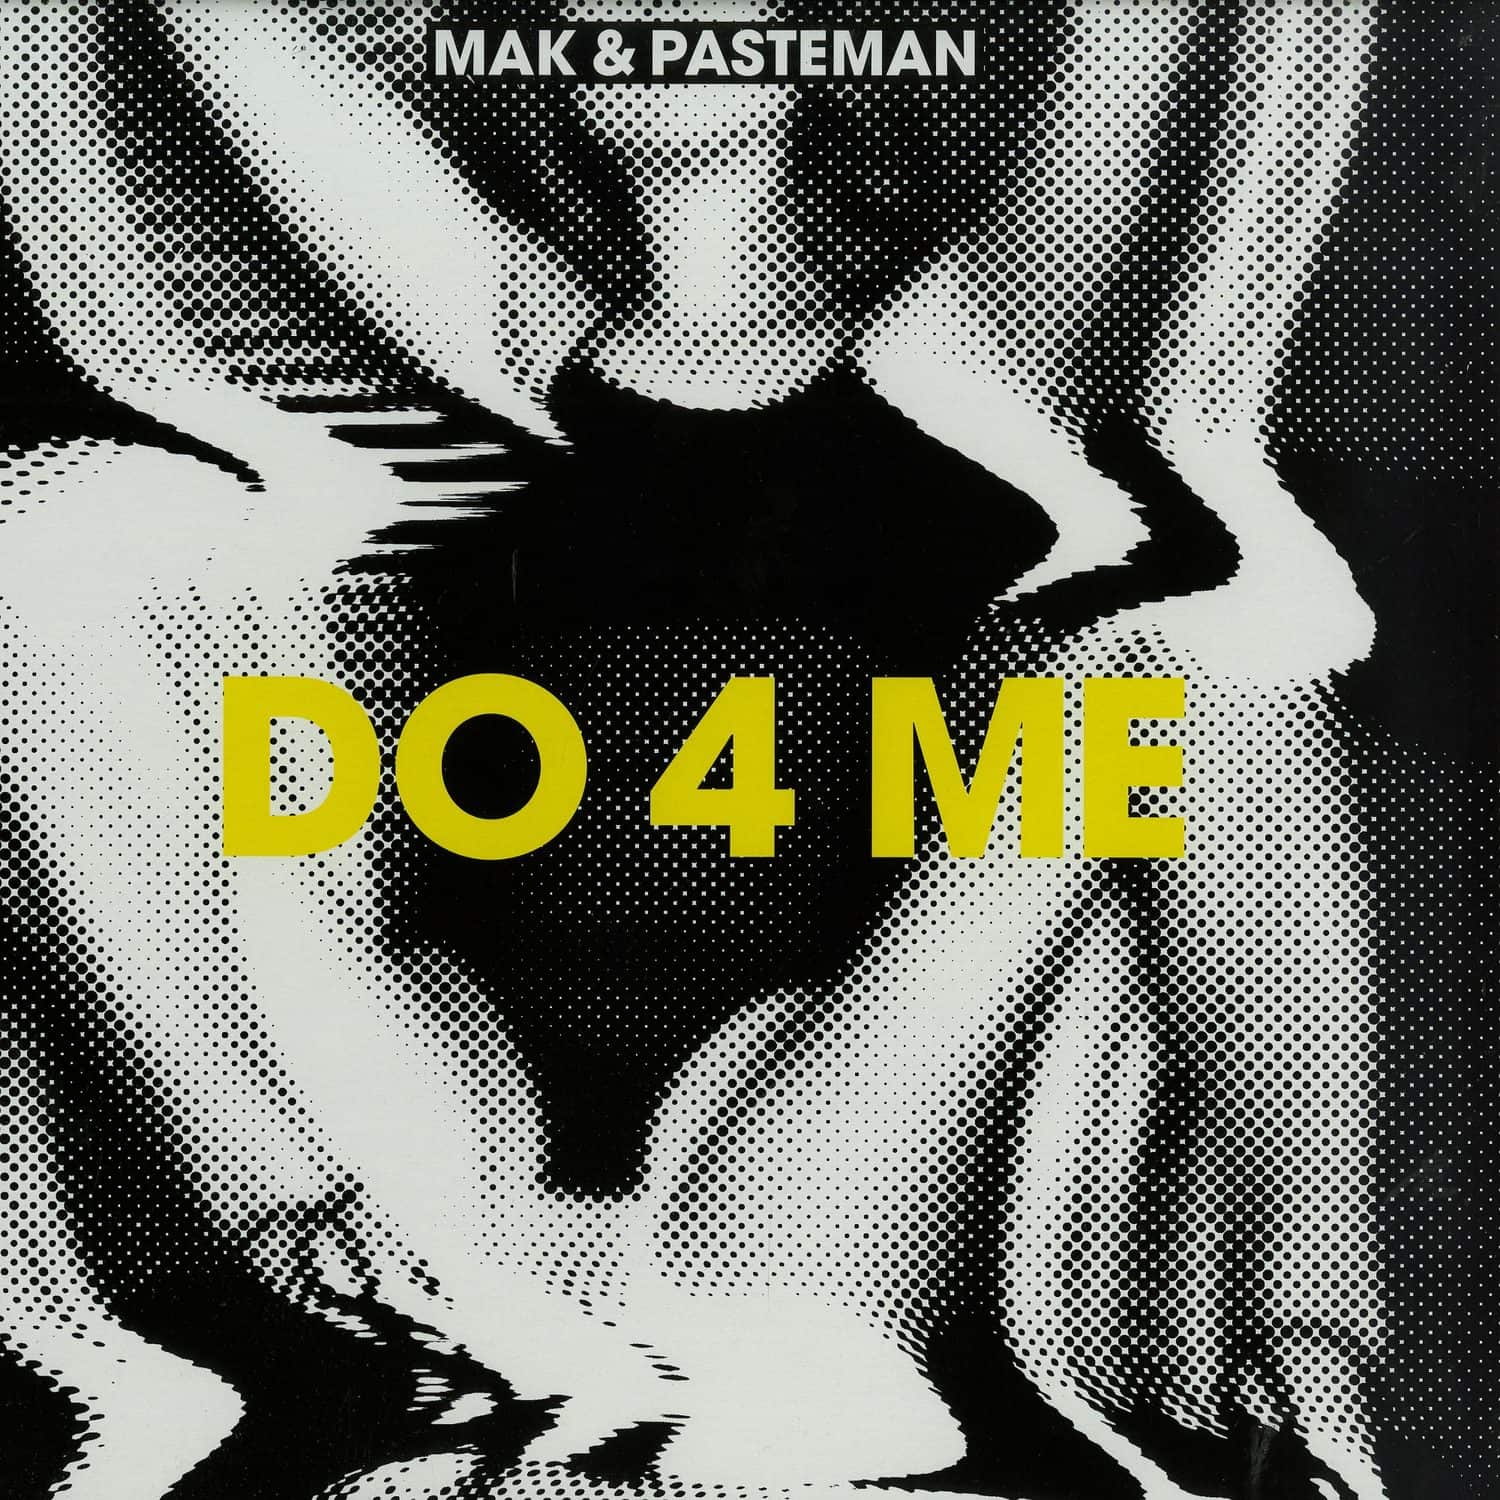 Mak & Pasteman - DO 4 ME